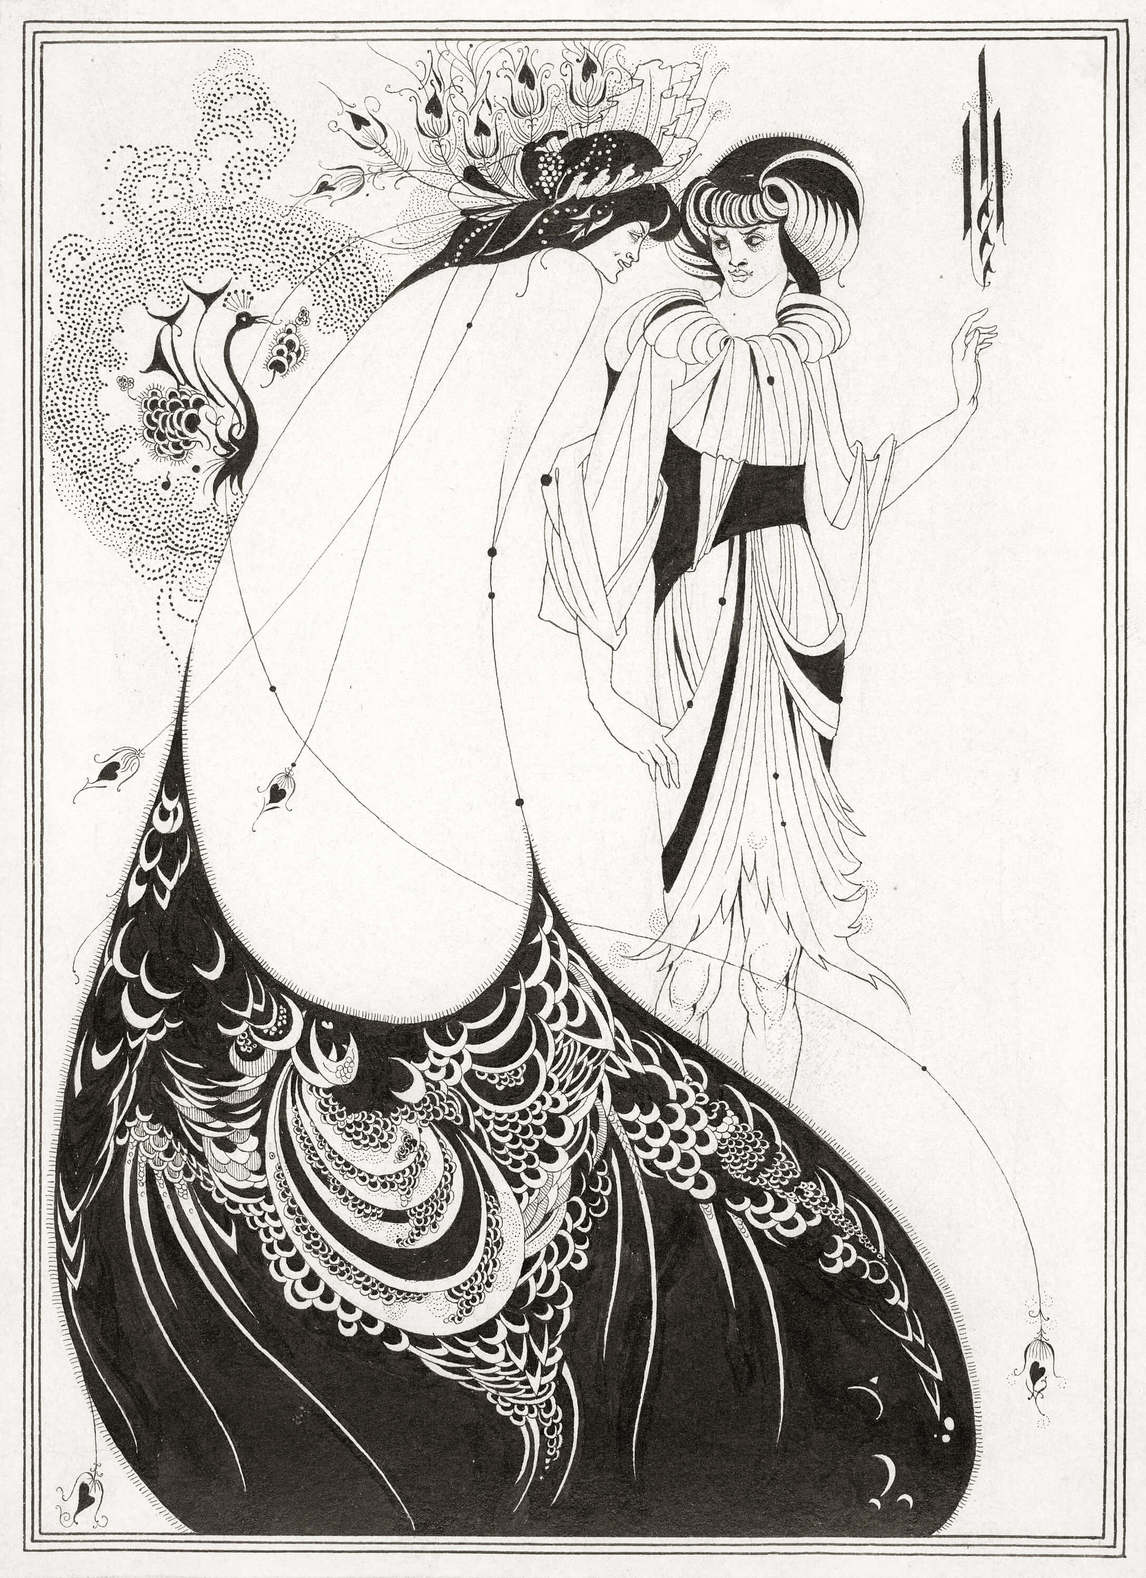 Aubrey Beardsley, The Peacock Skirt (La jupe-paon), 1893